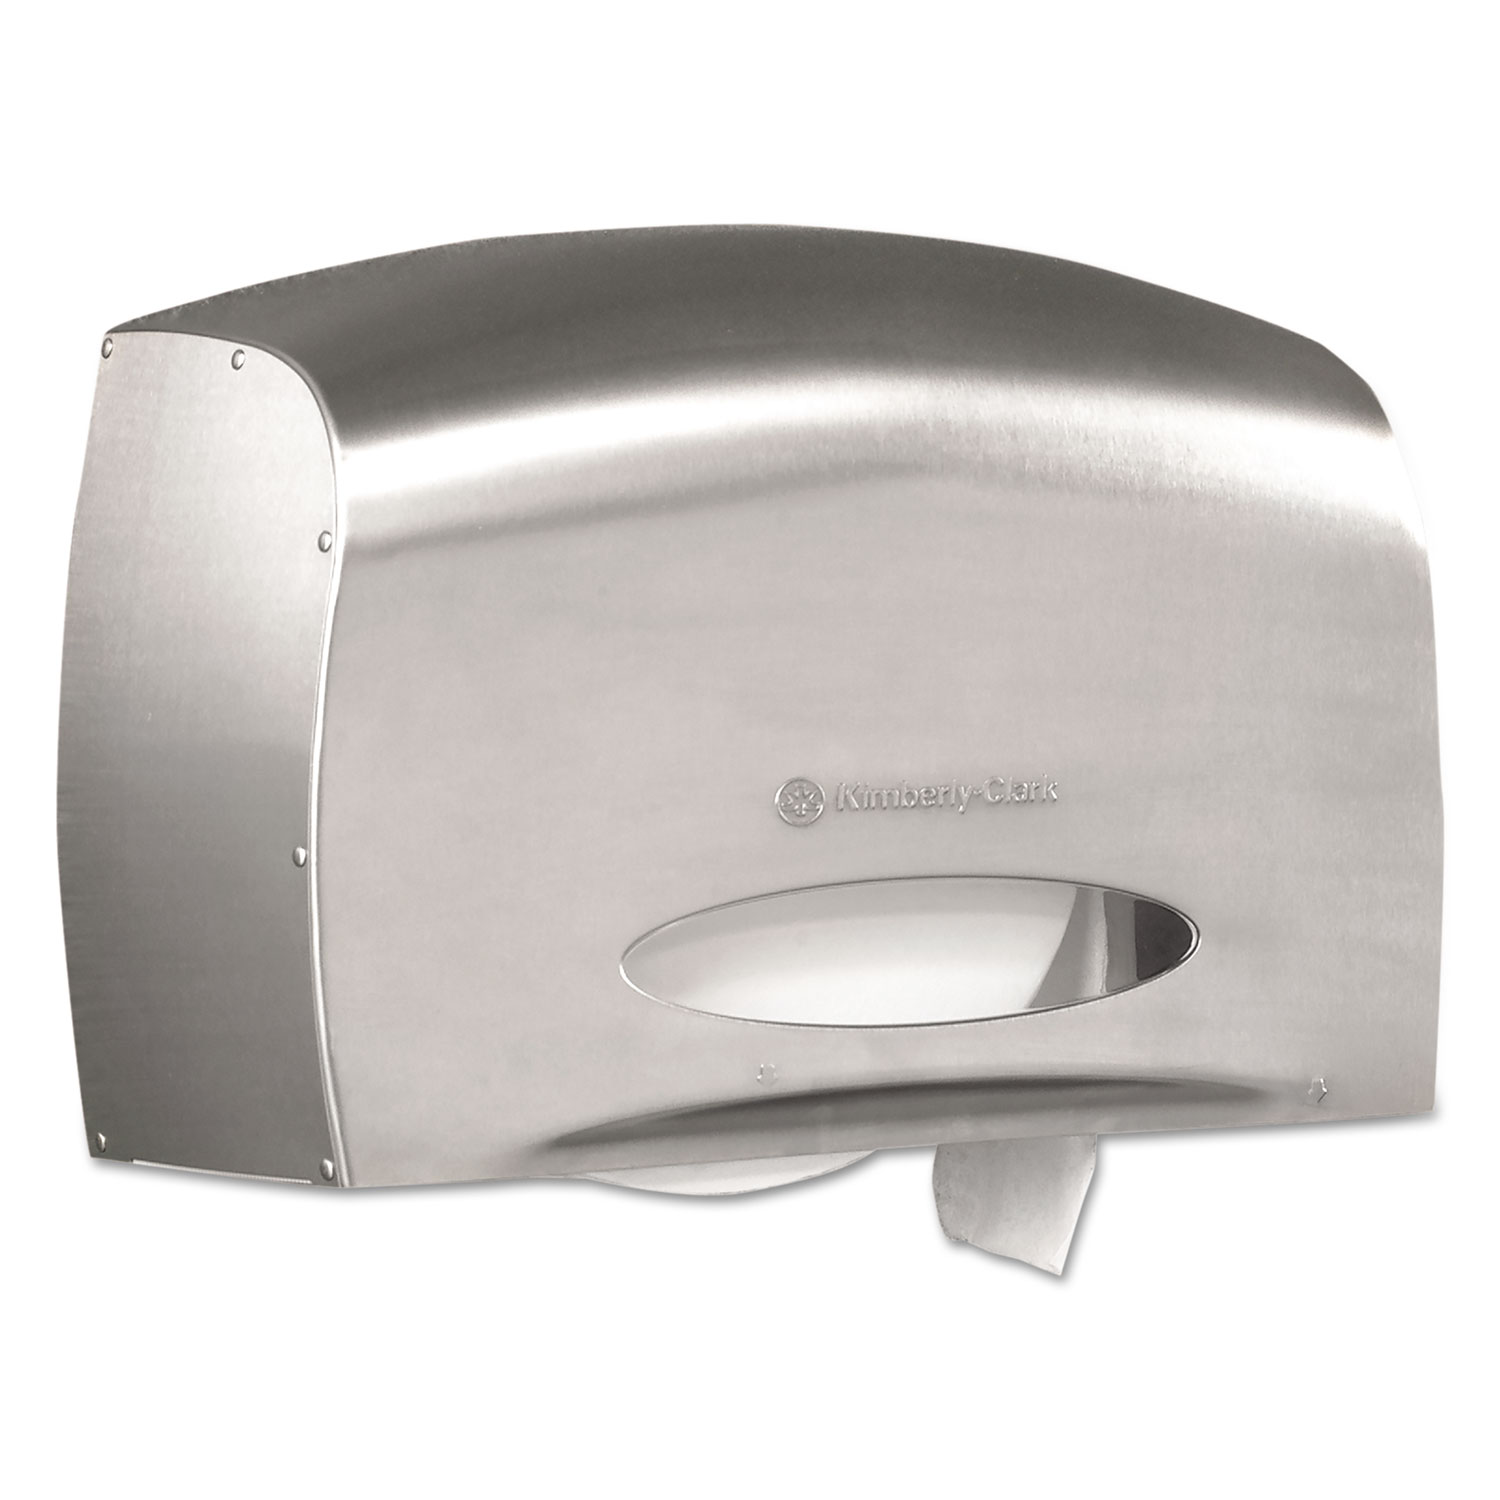  Scott 9601 Pro Coreless Jumbo Roll Tissue Dispenser, EZ Load, 6x9.8x14.3, Stainless Steel (KCC09601) 